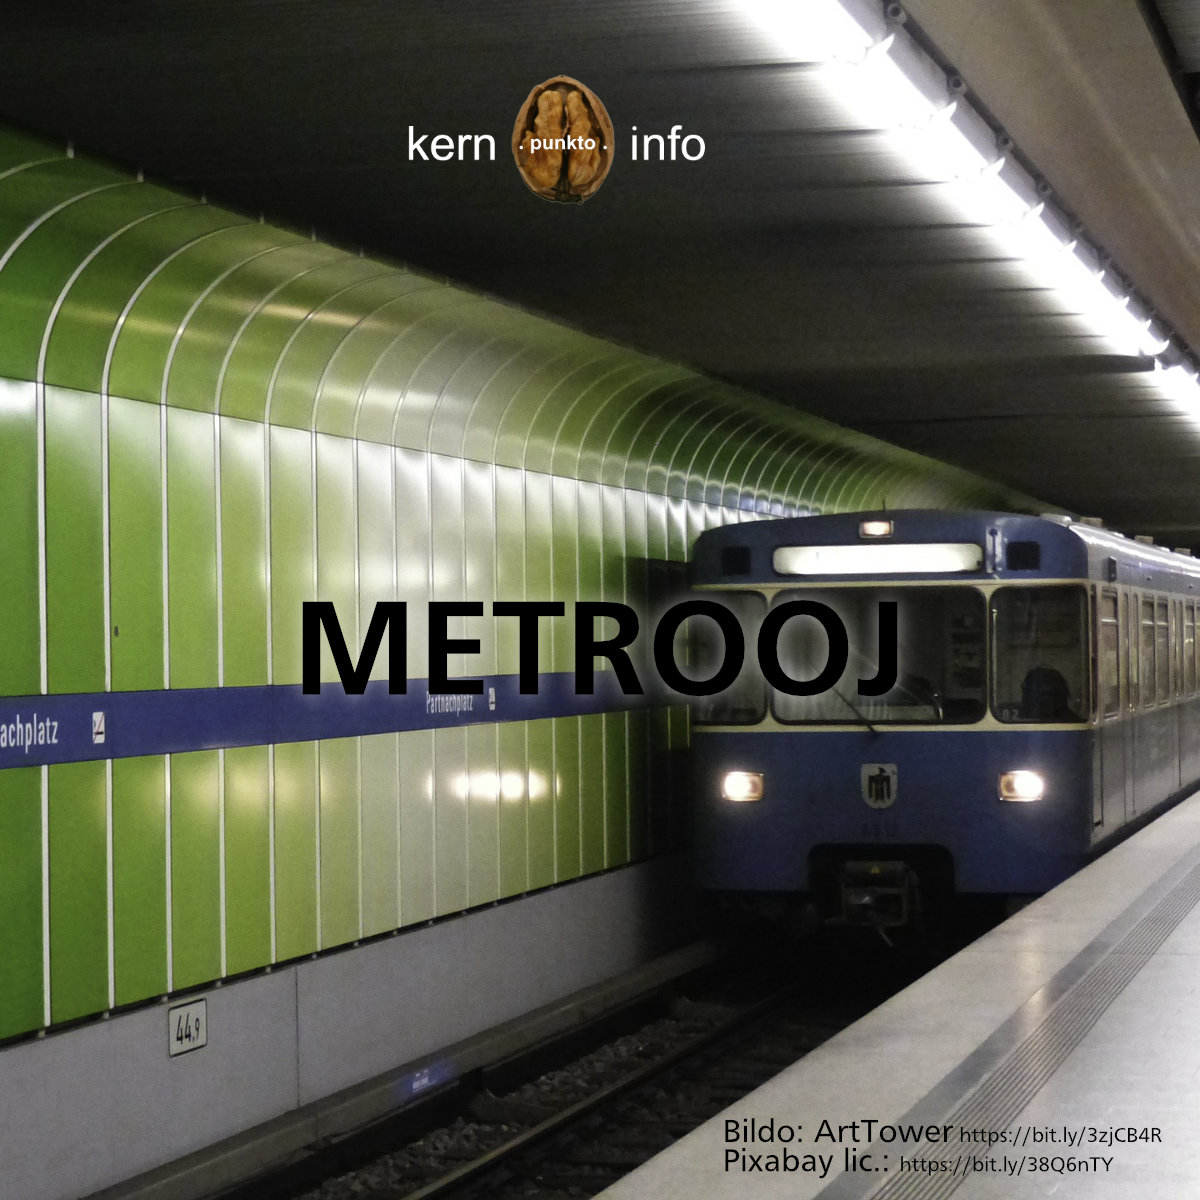 KP202 Metrooj